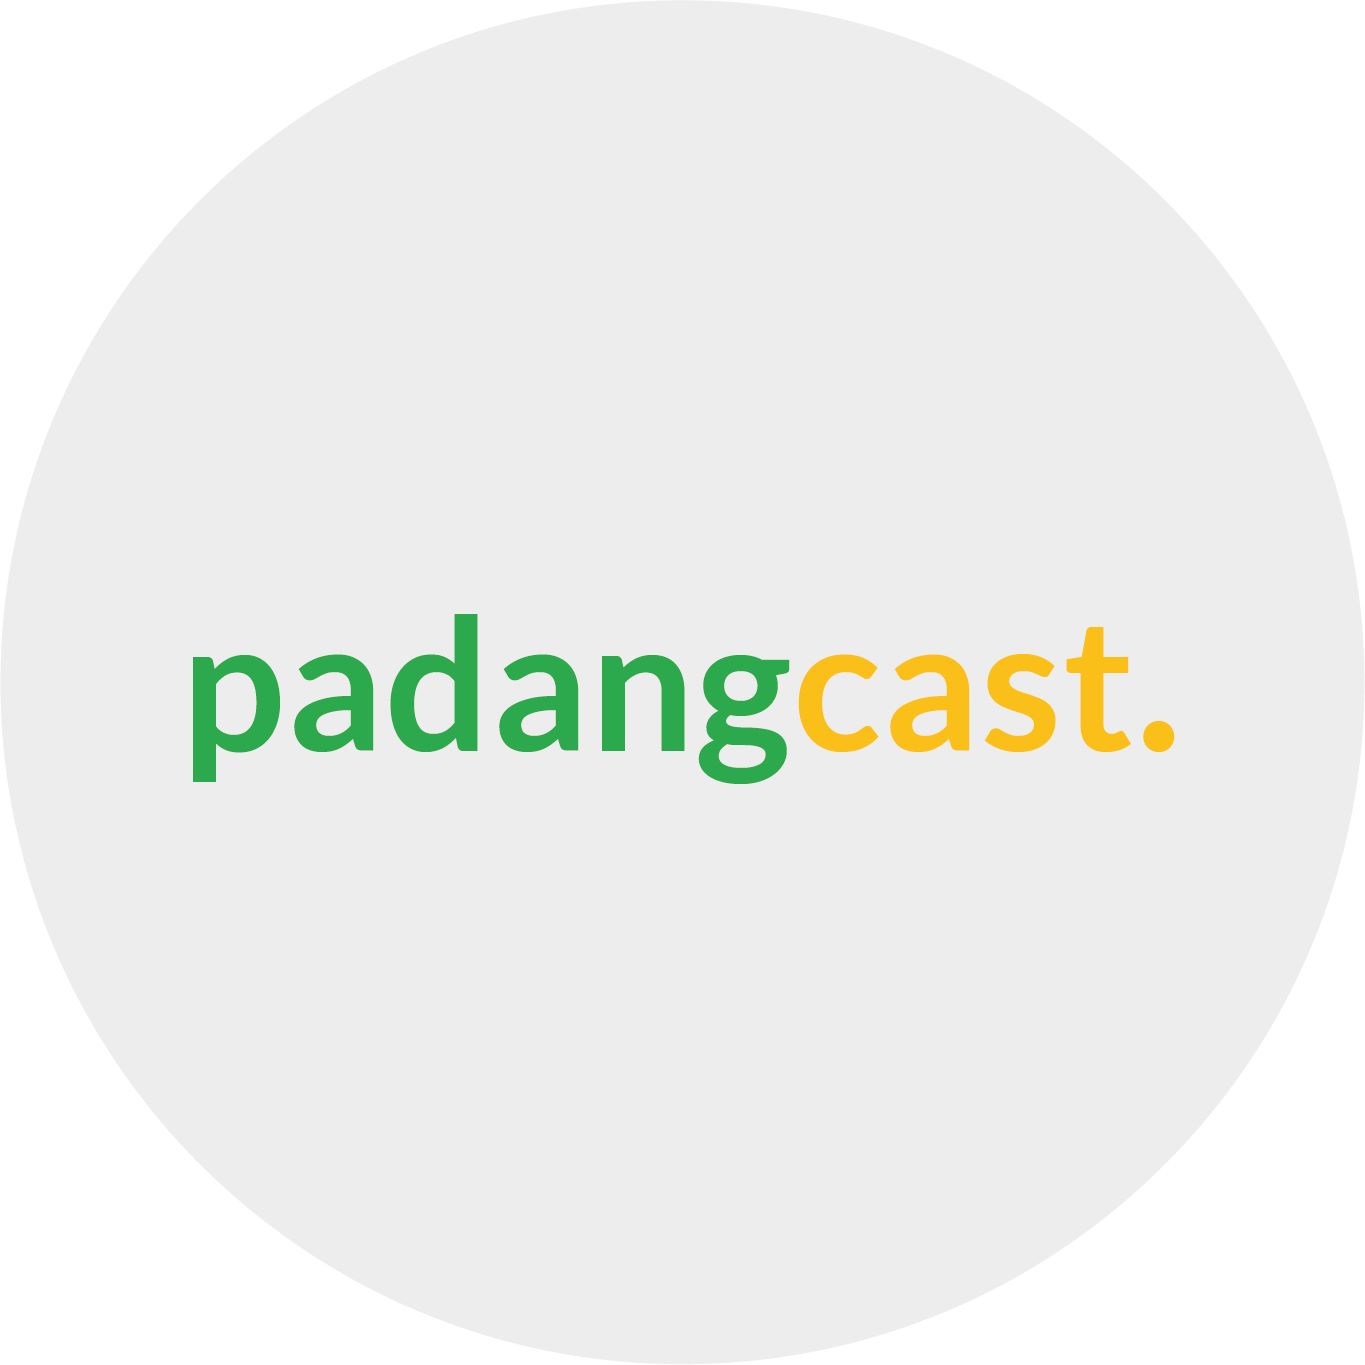 Padang Cast